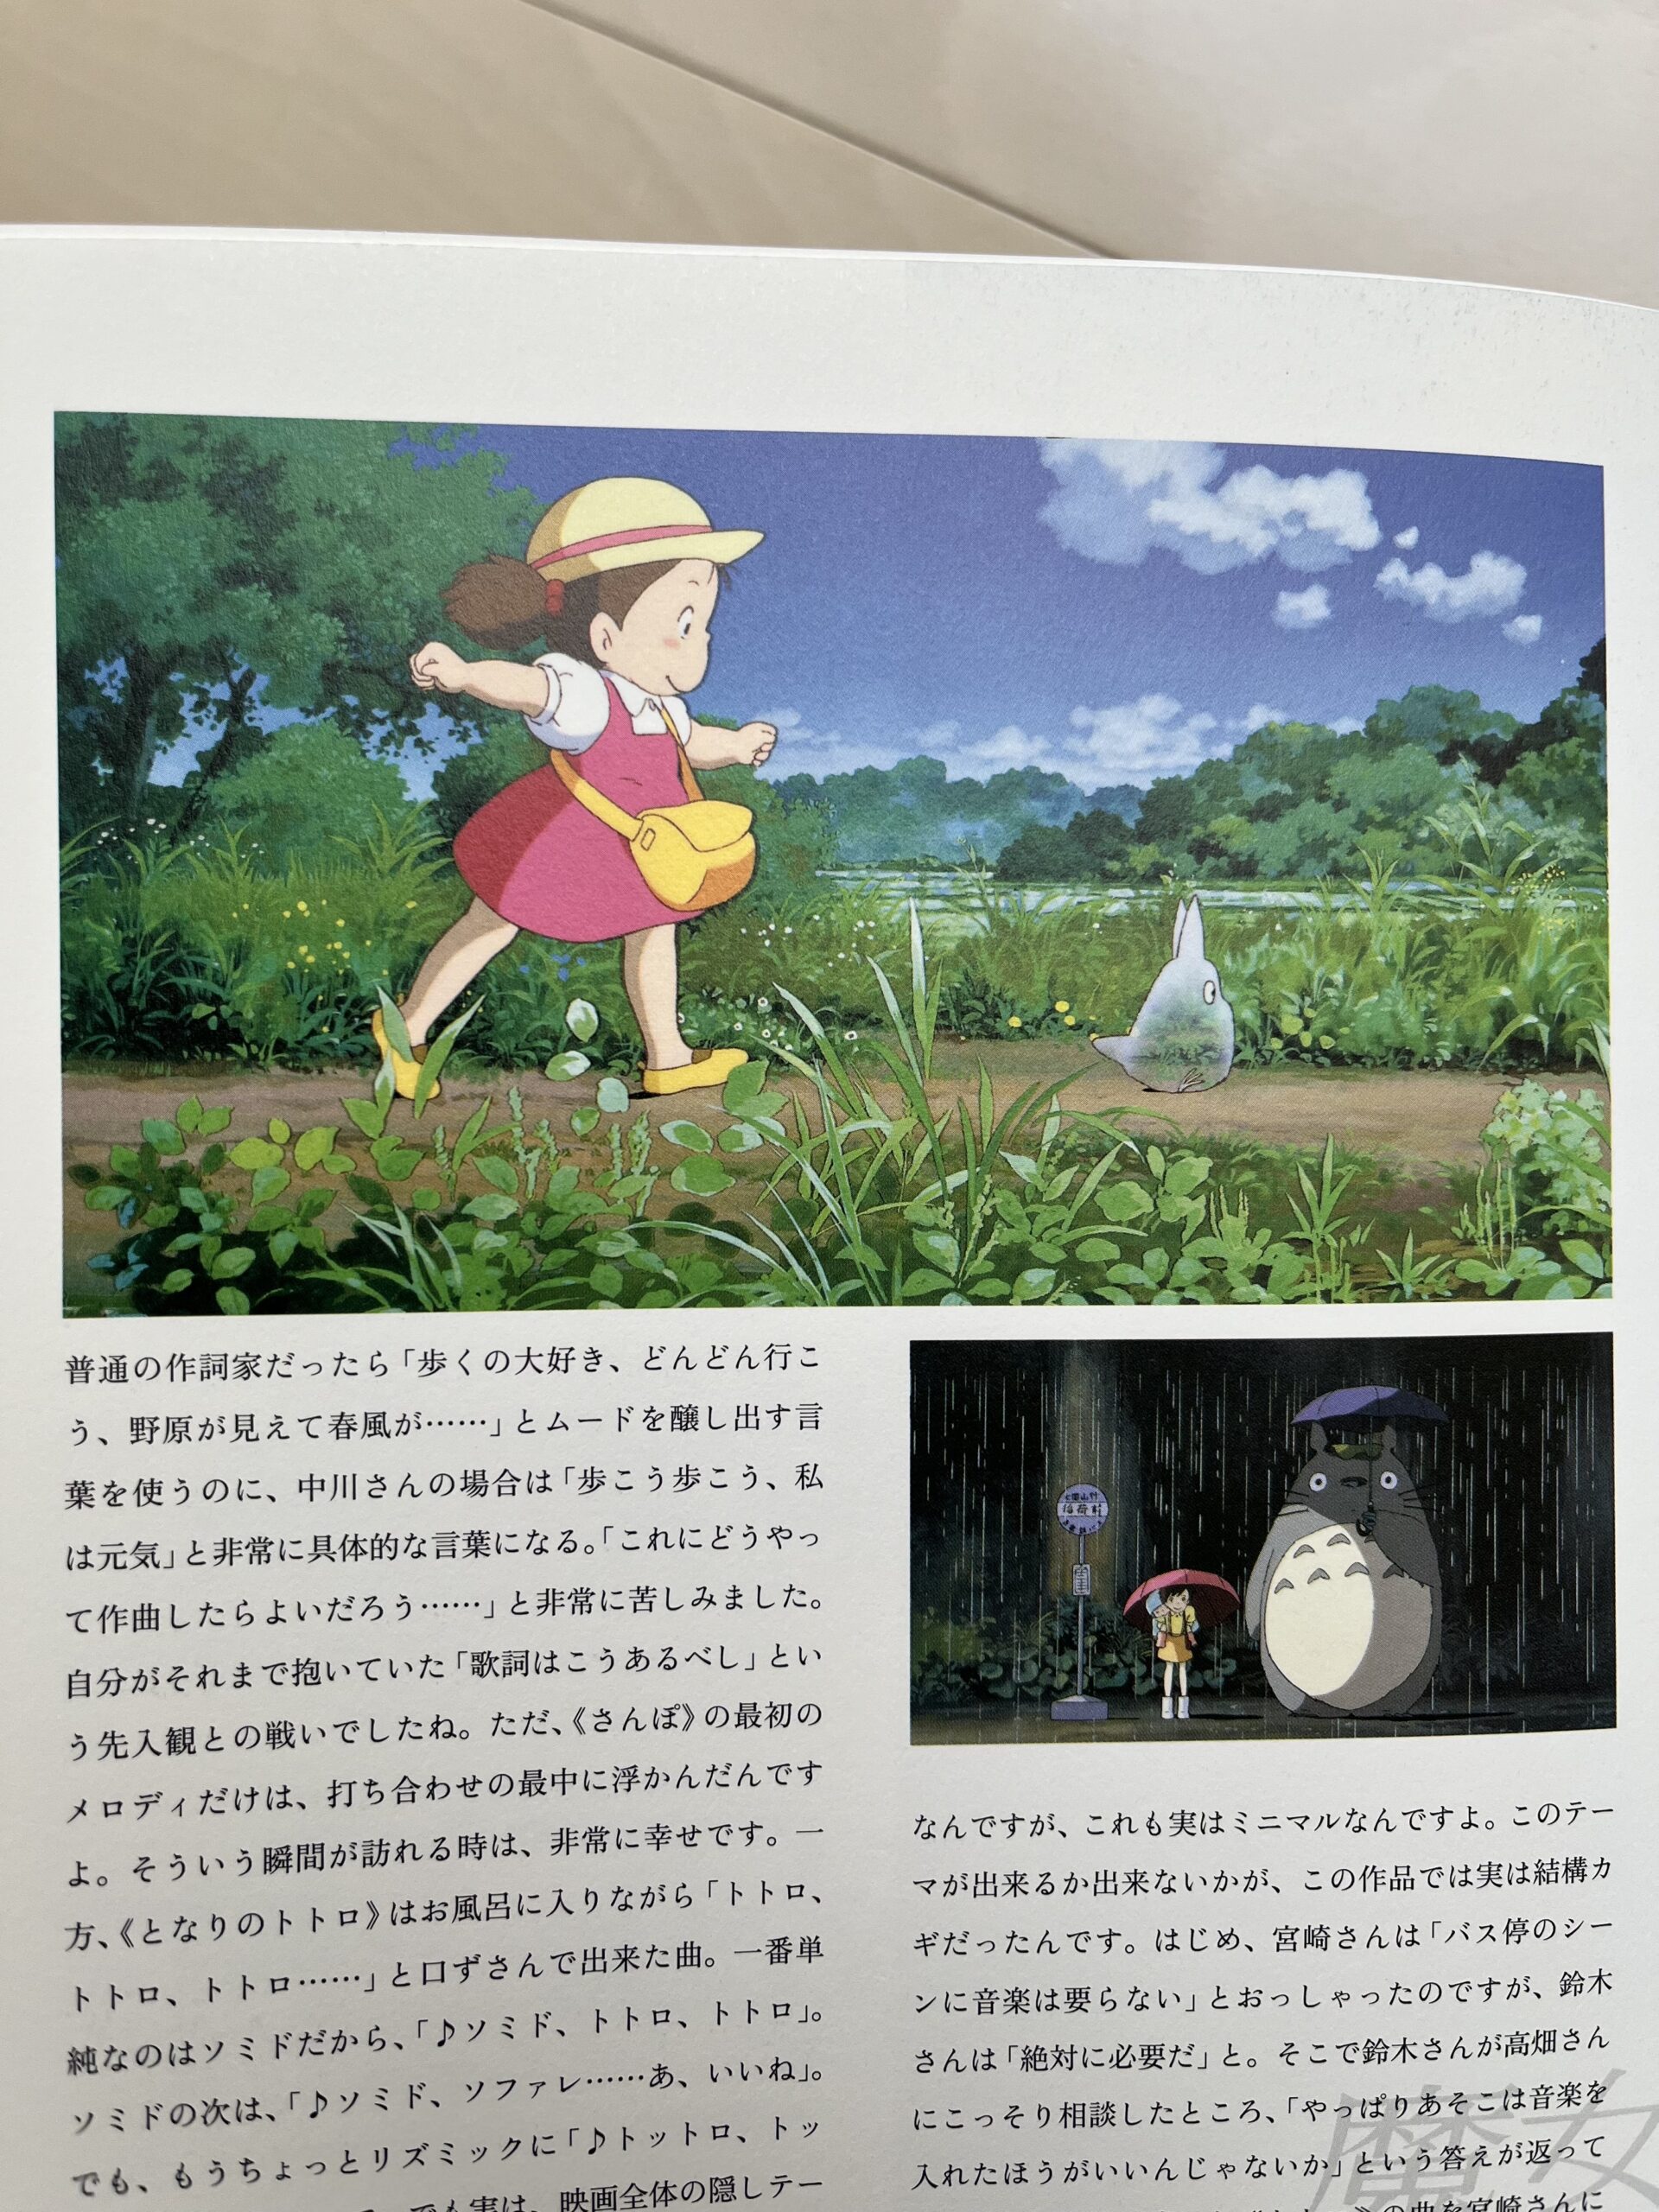 Joe Hisaishi in Budokan: 25 years with the animation of Miyazaki (2008)